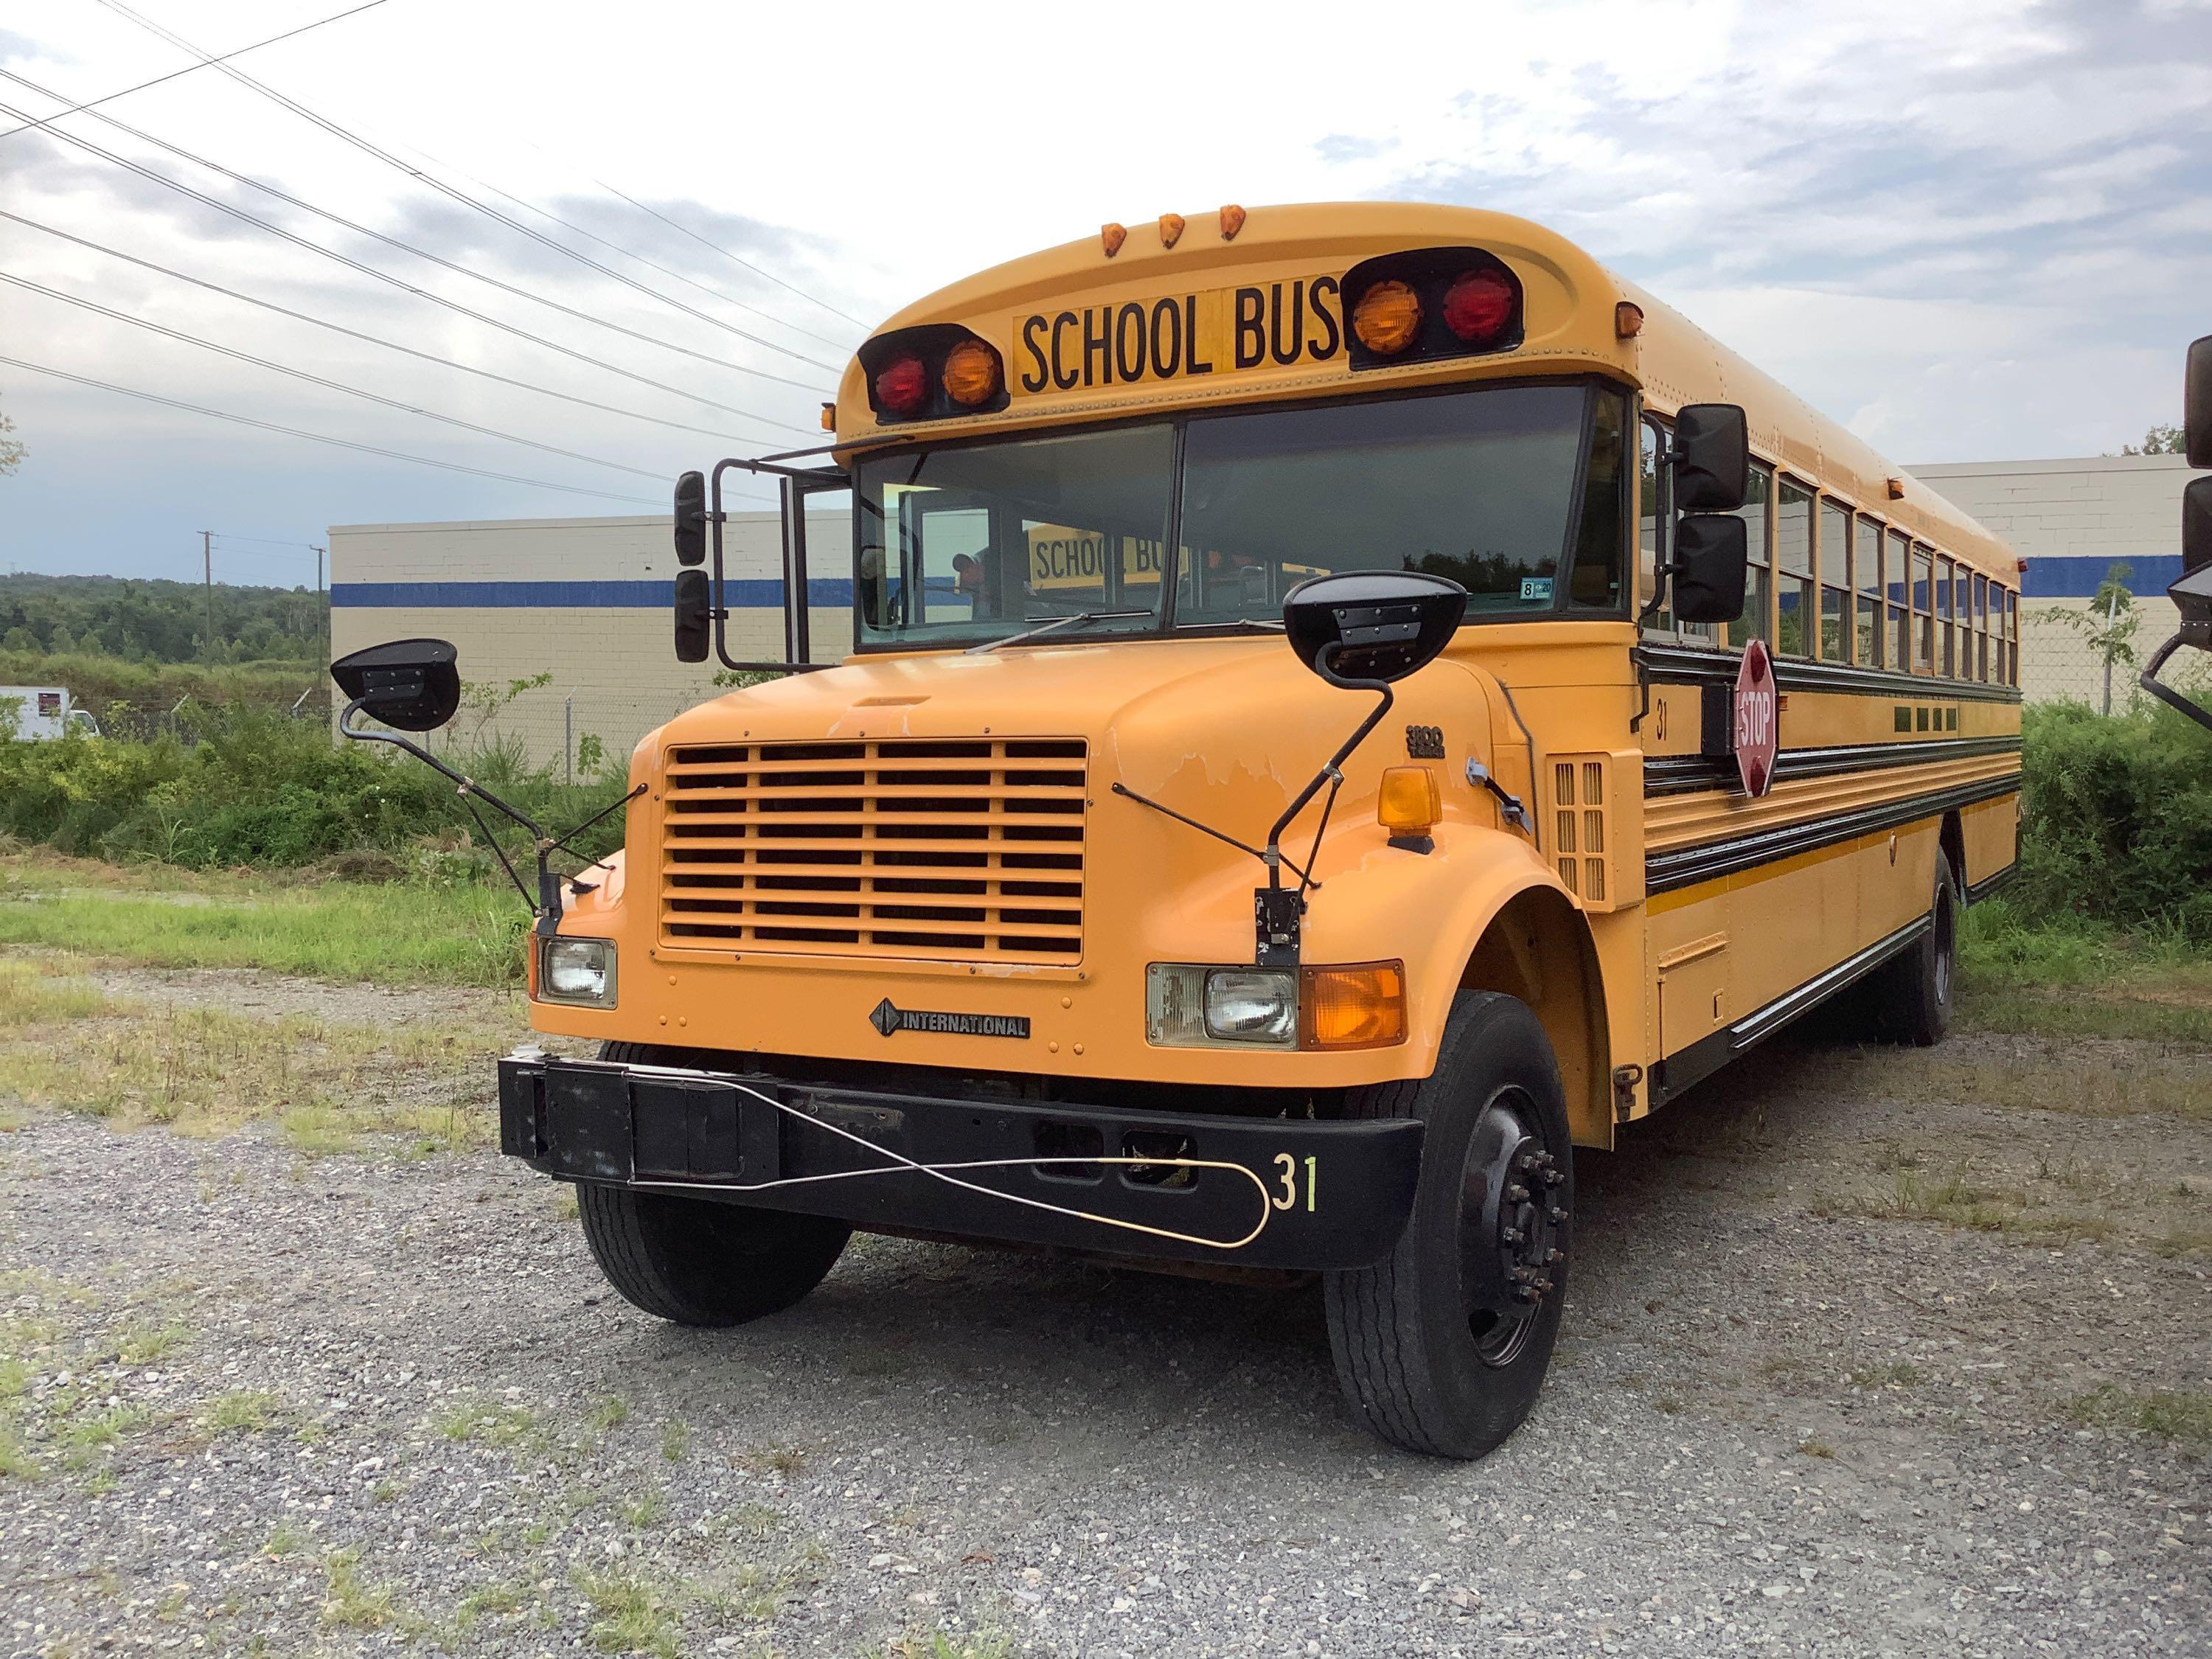 1996 International Bluebird 3800 School Bus (County of Middlesex Unit #31)